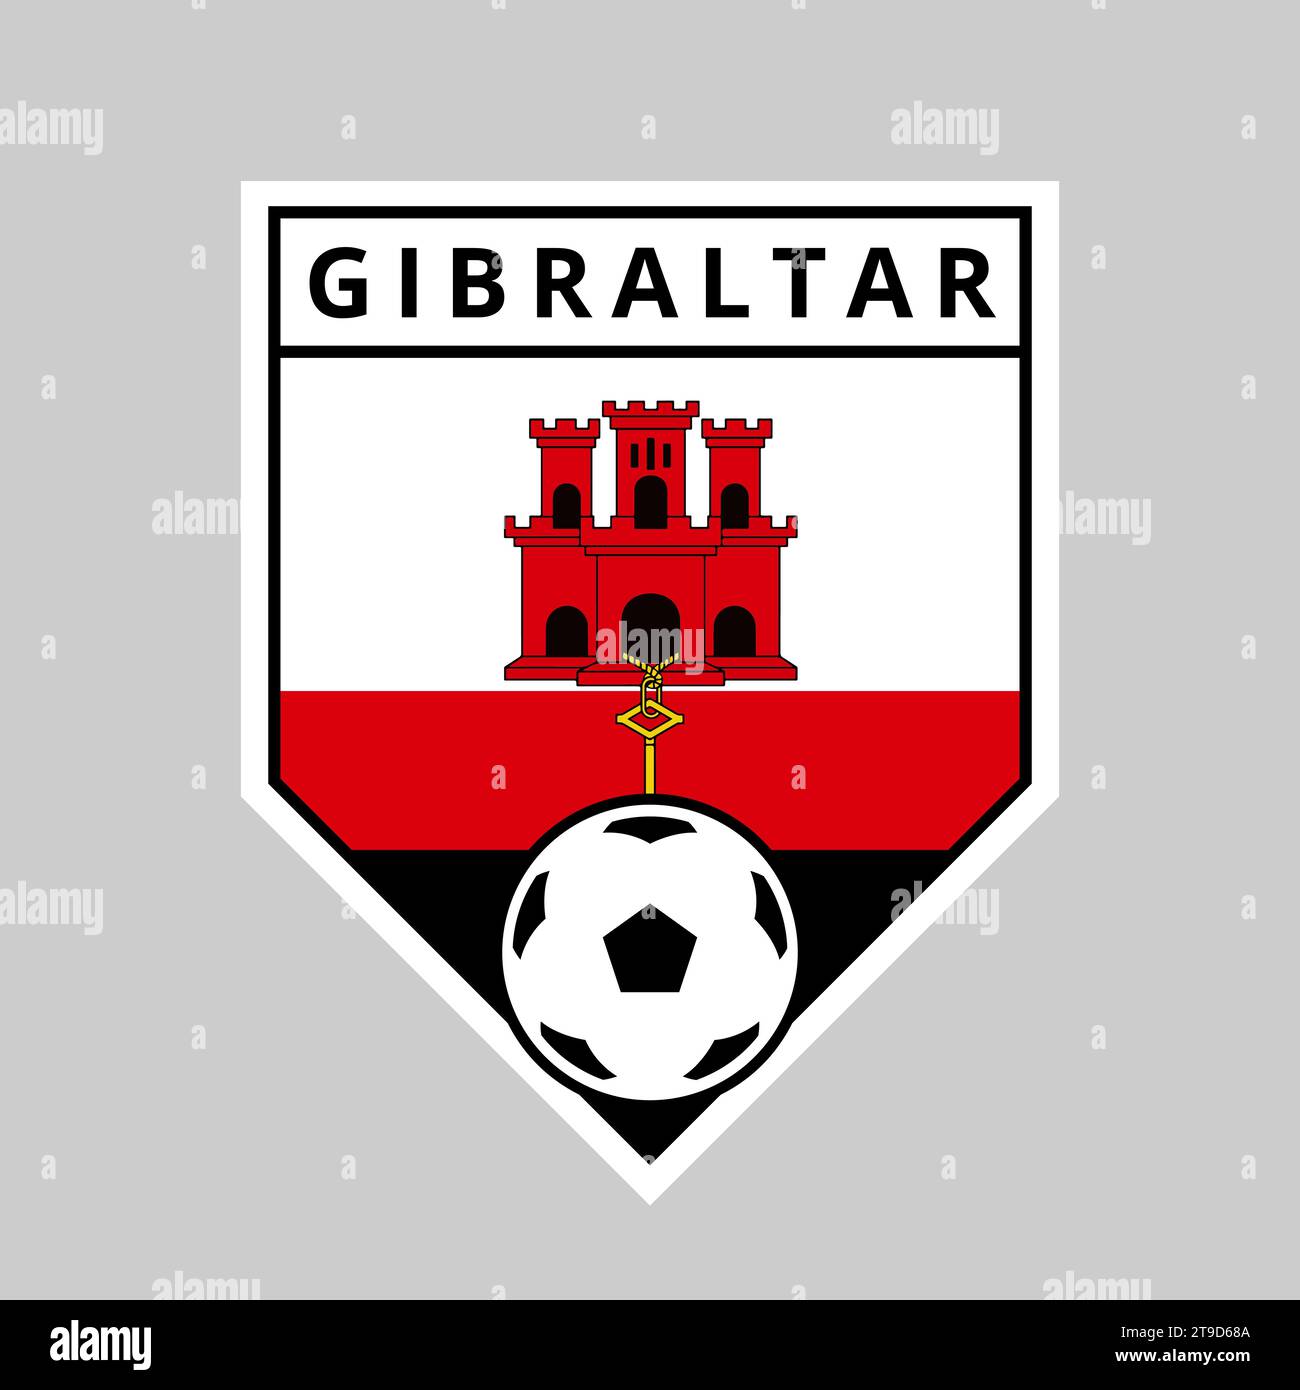 Illustration of Angled Shield Team Badge of Gibraltar for Football Tournament Stock Vector